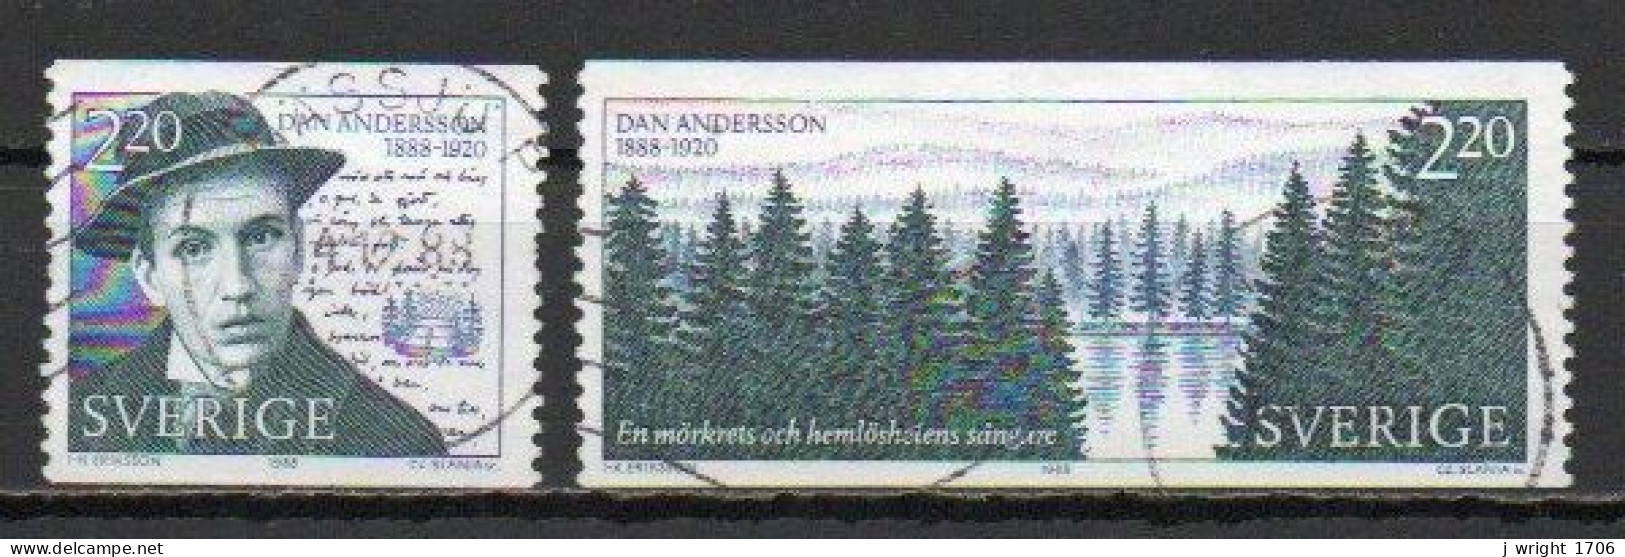 Sweden, 1988, Dan Andersson, Set, USED - Gebraucht